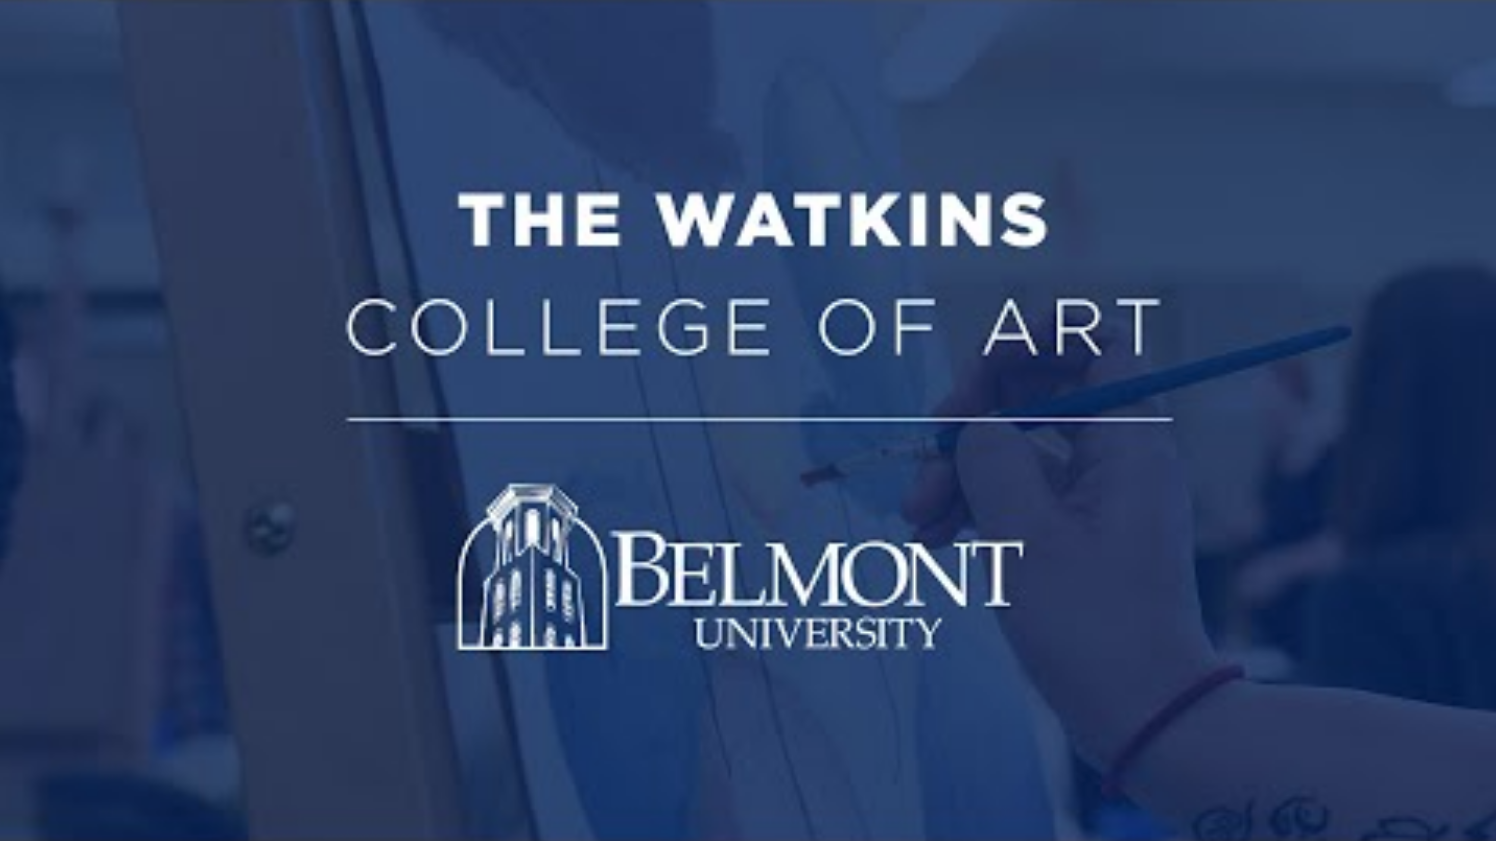 Watkins College of Art at Belmont University